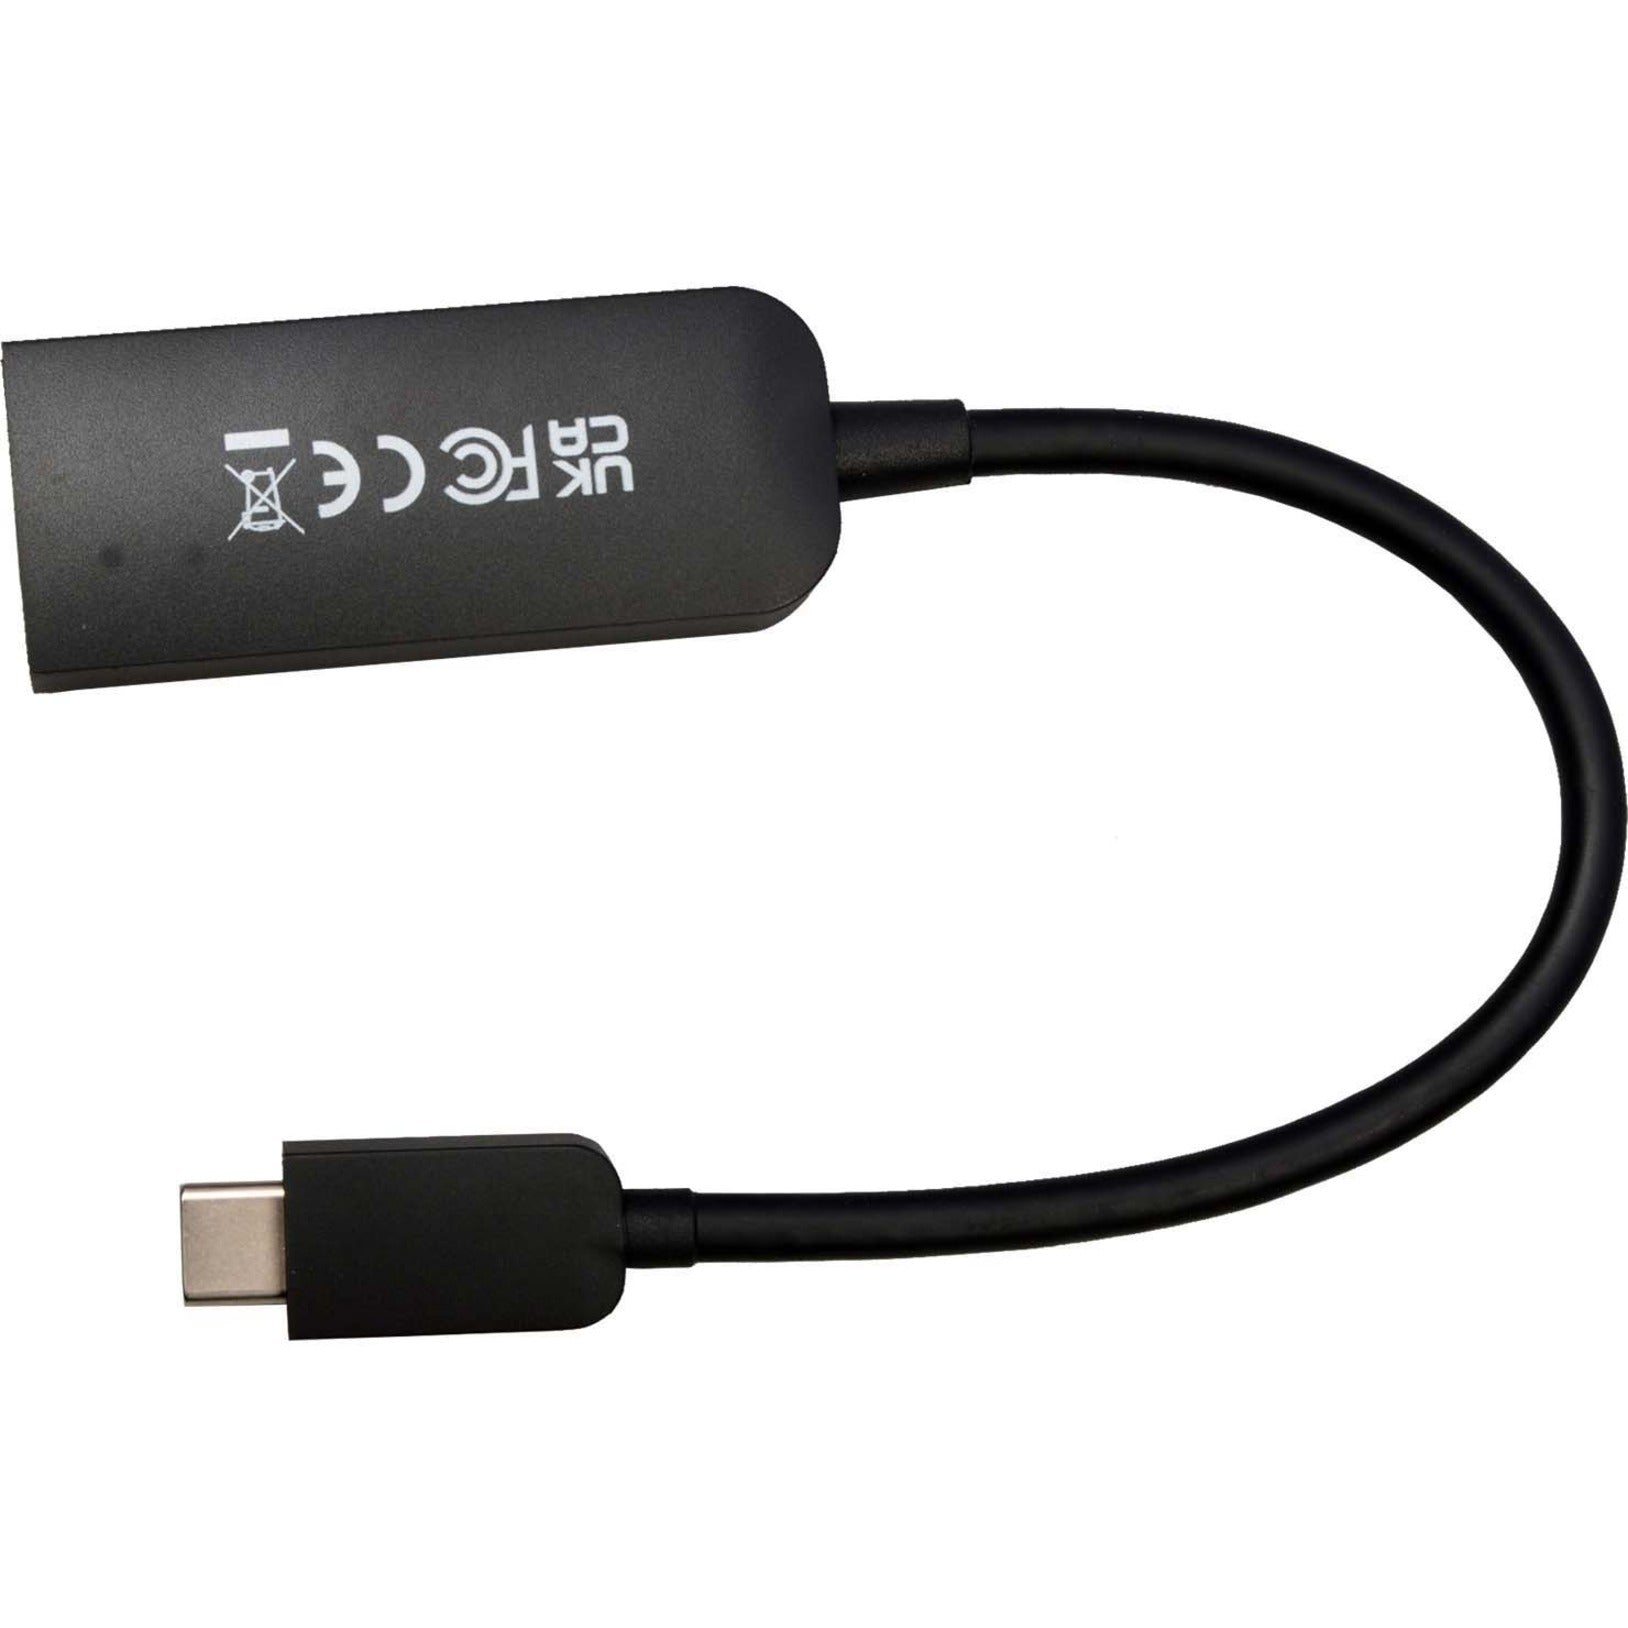 V7 V7USBCDP14 USB-C Male to DisplayPort 1.4 Female 8K/4K UHD Cable, 32.4 Gbps, Strain Relief